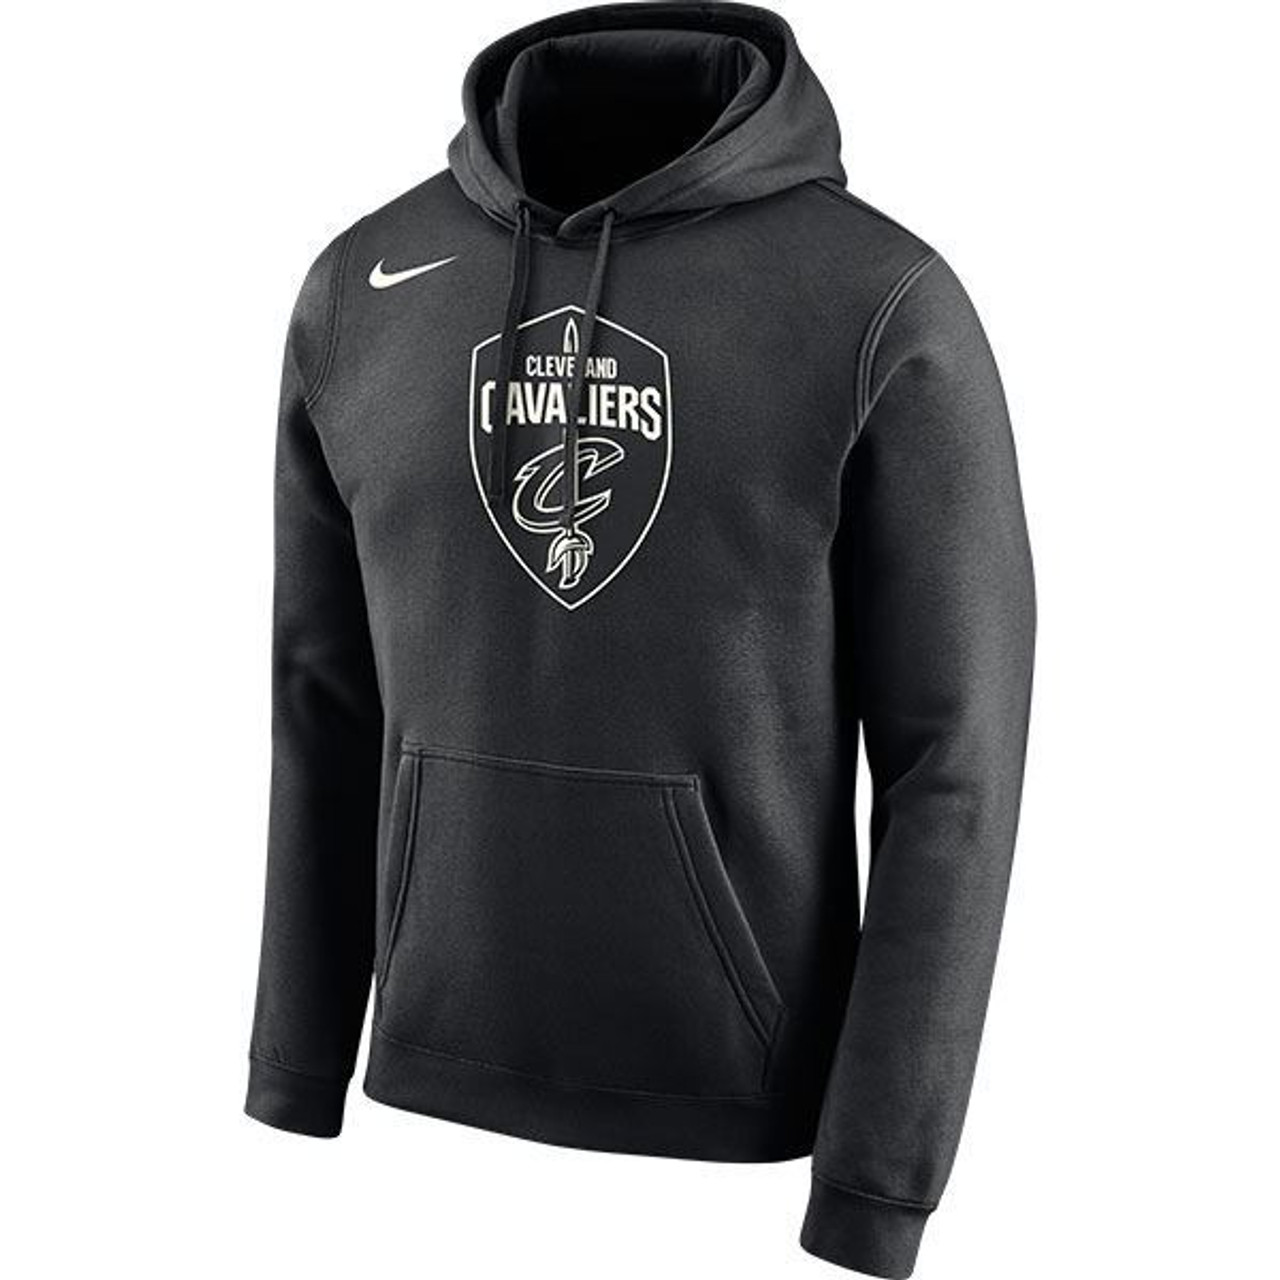 Nike Black & White Global Shield Hoodie - Cleveland Cavaliers